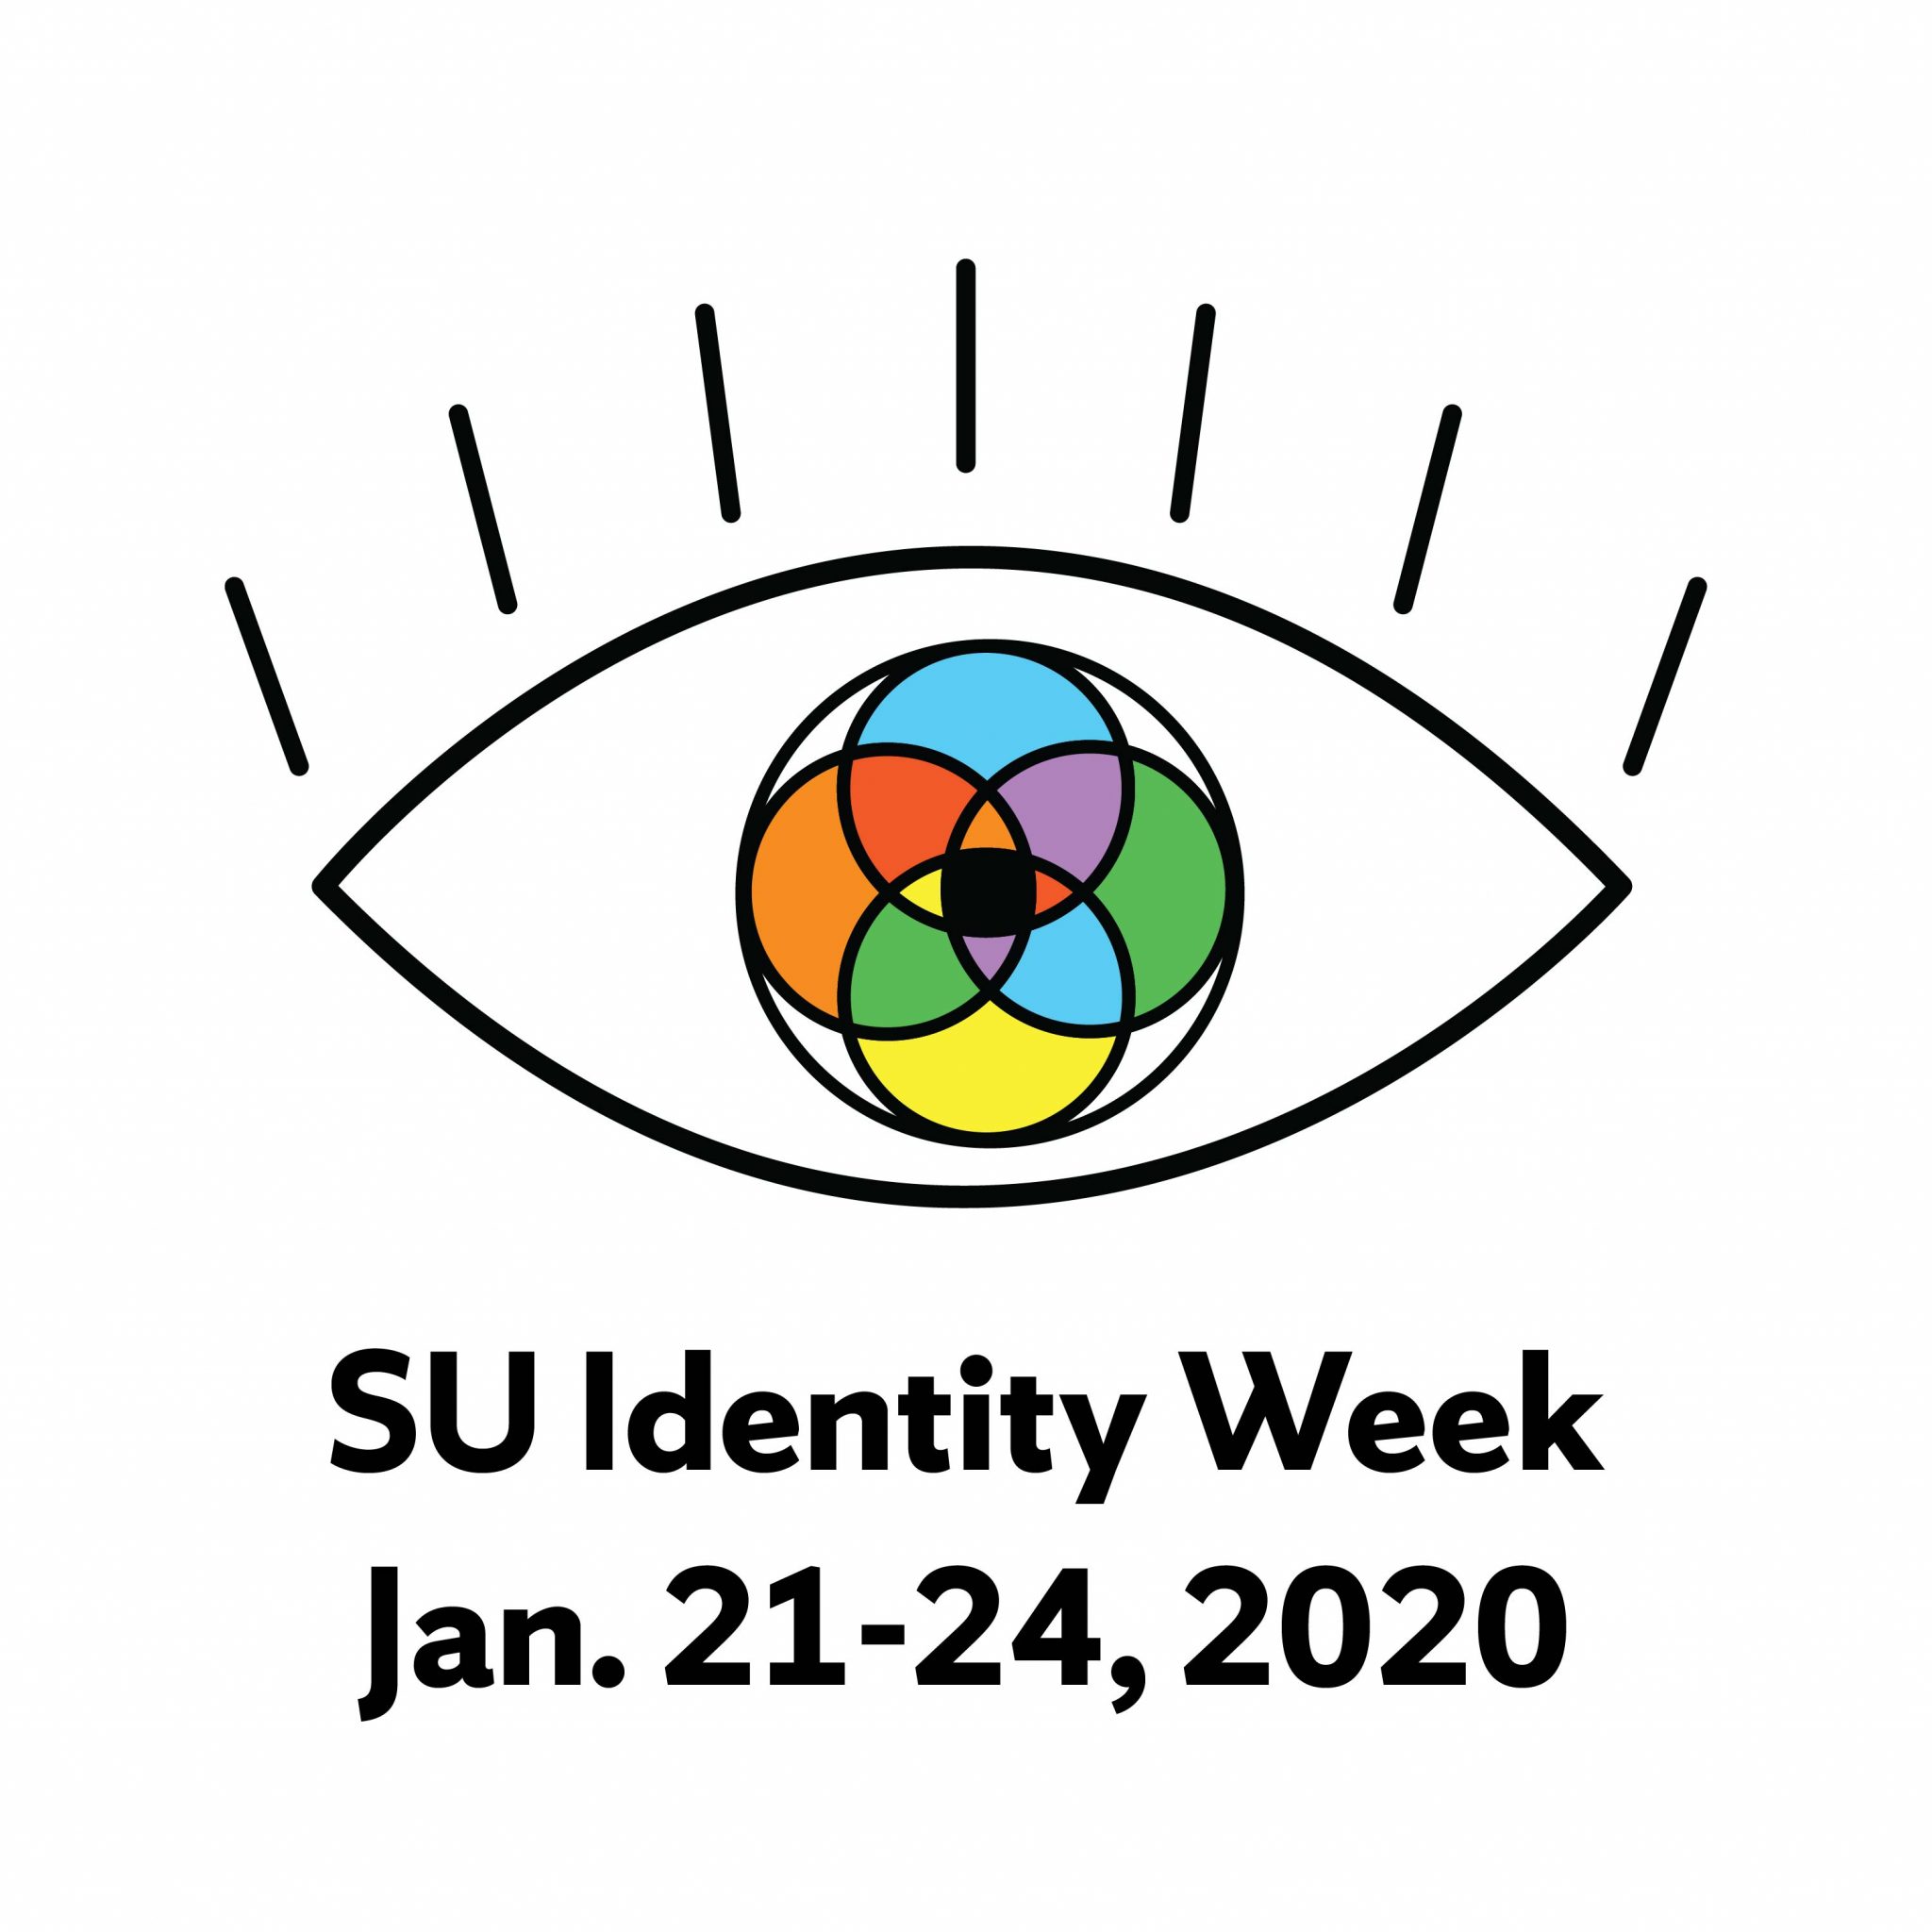 Diversity Is the Focus of Celebrating Identity Week 2020 Syracuse